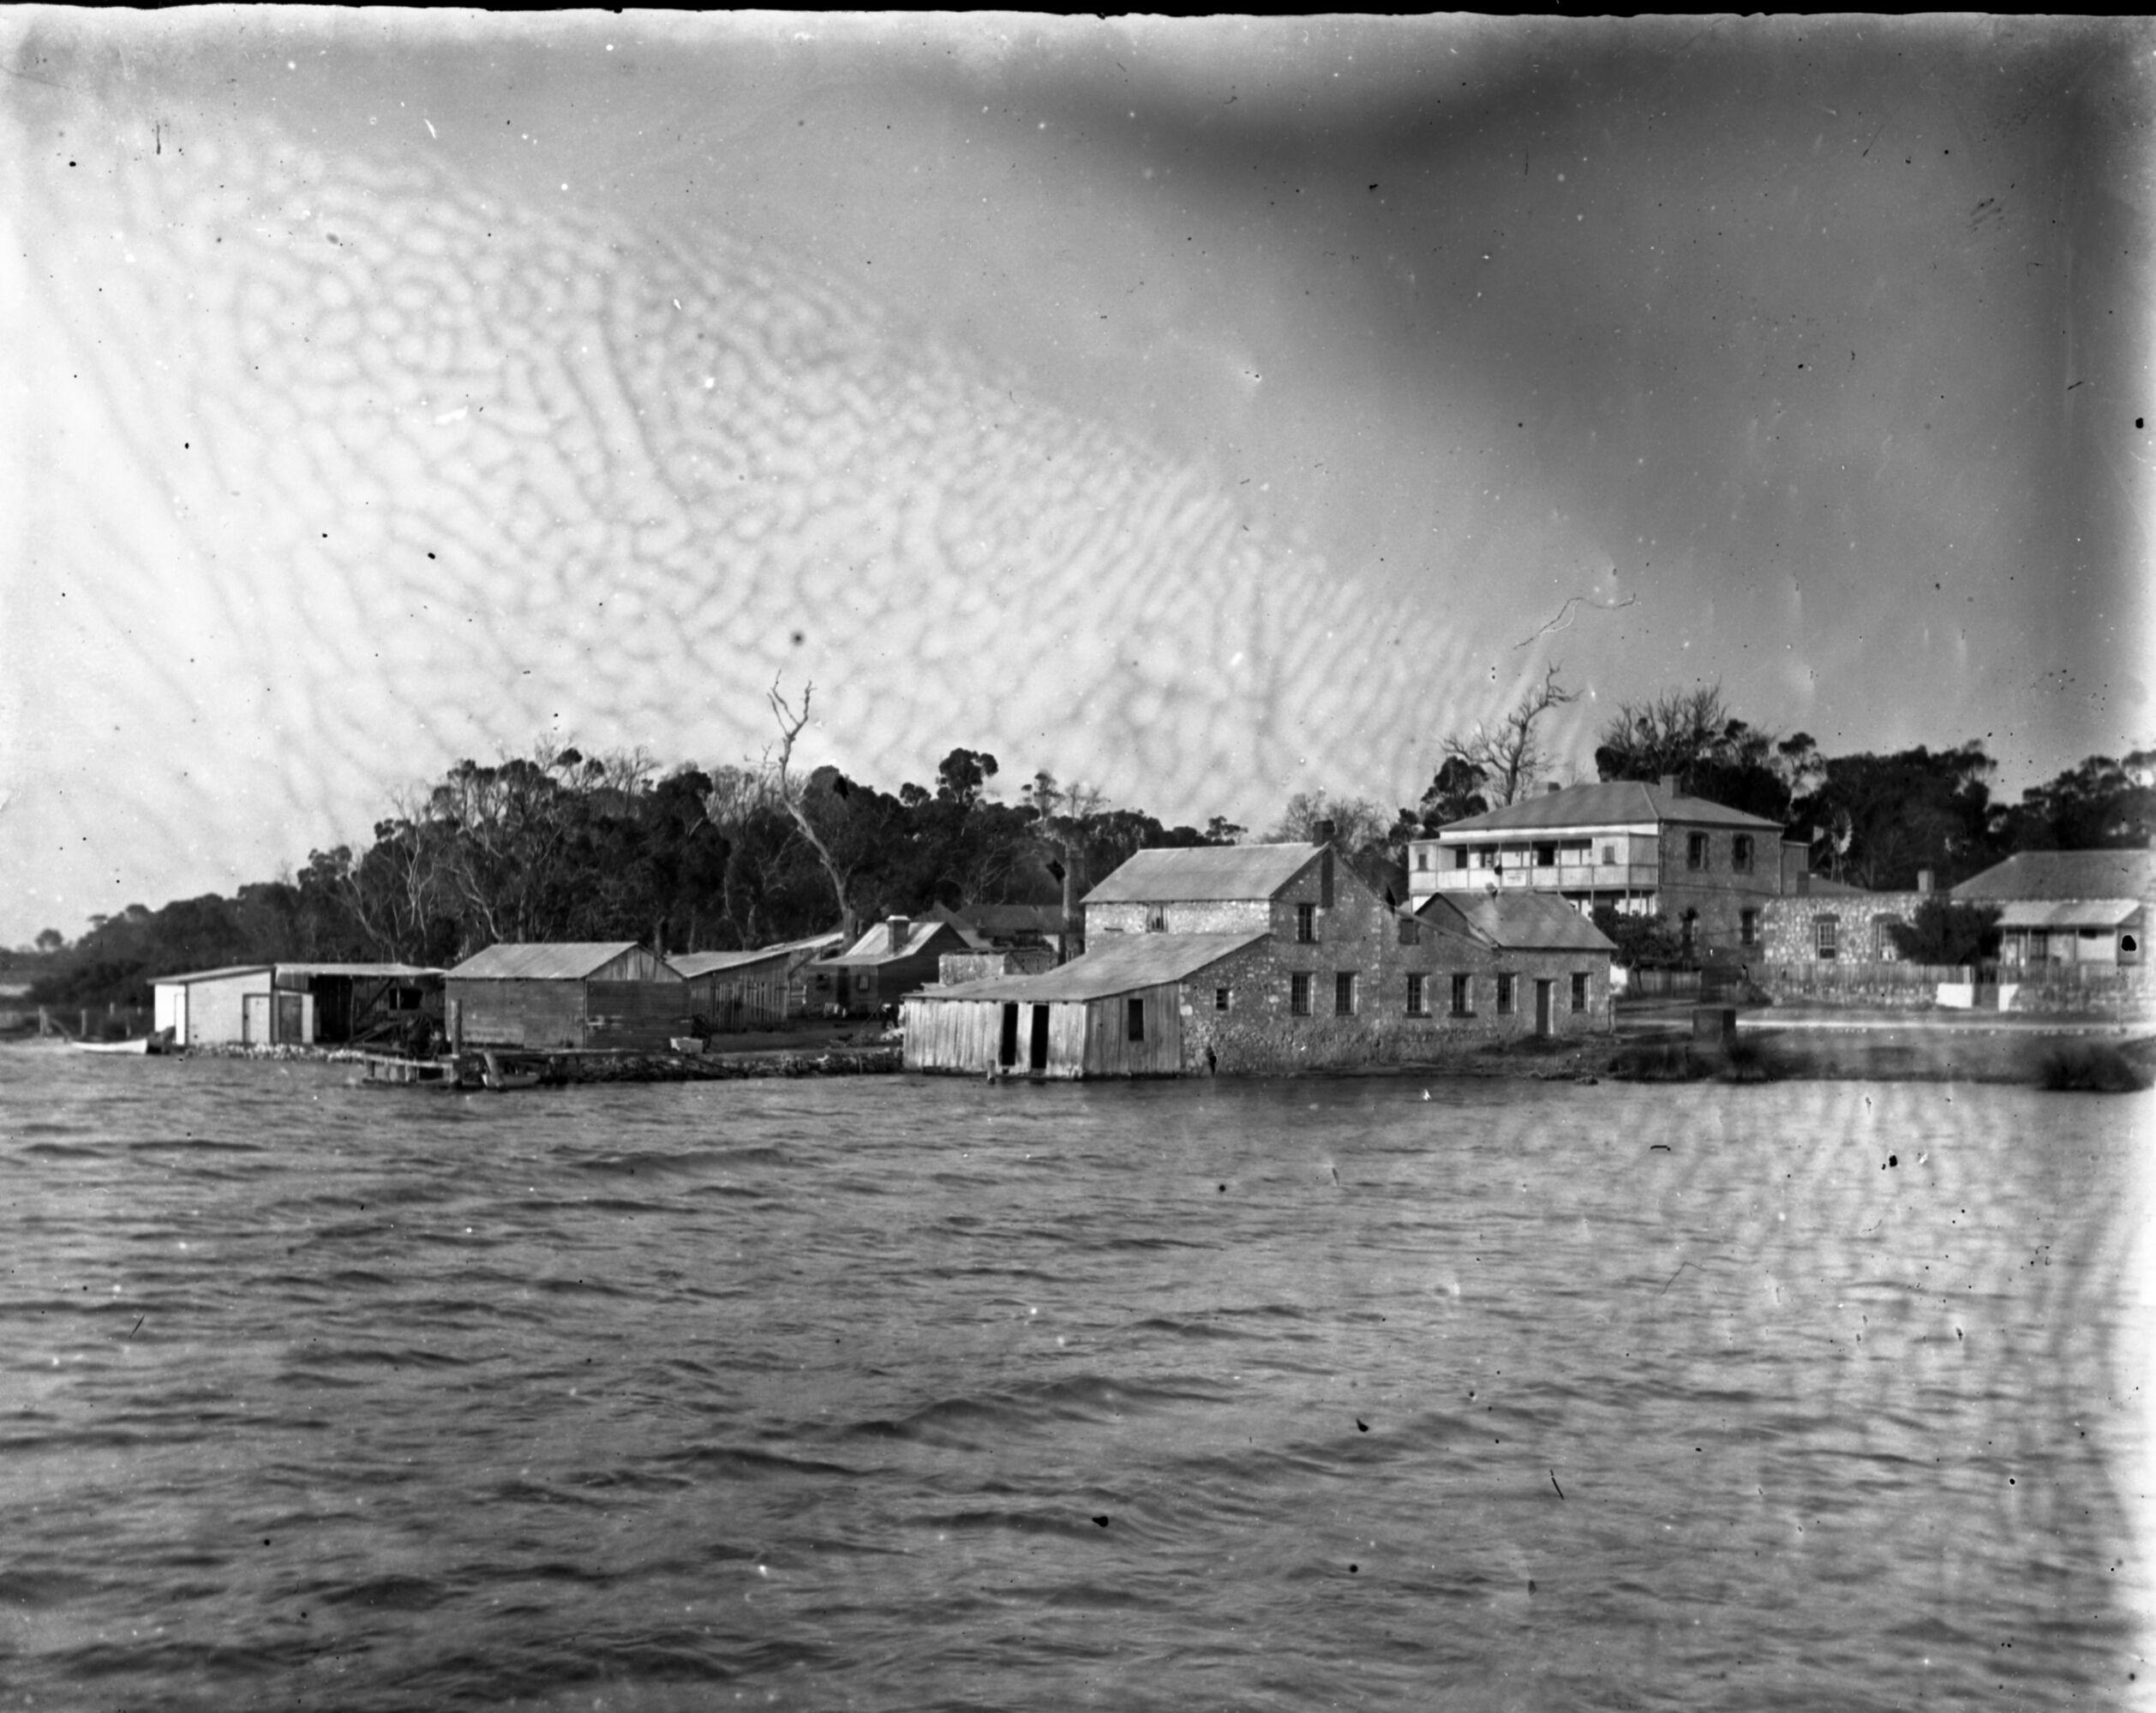 Tuckey's cannery in Mandurah c. 1900